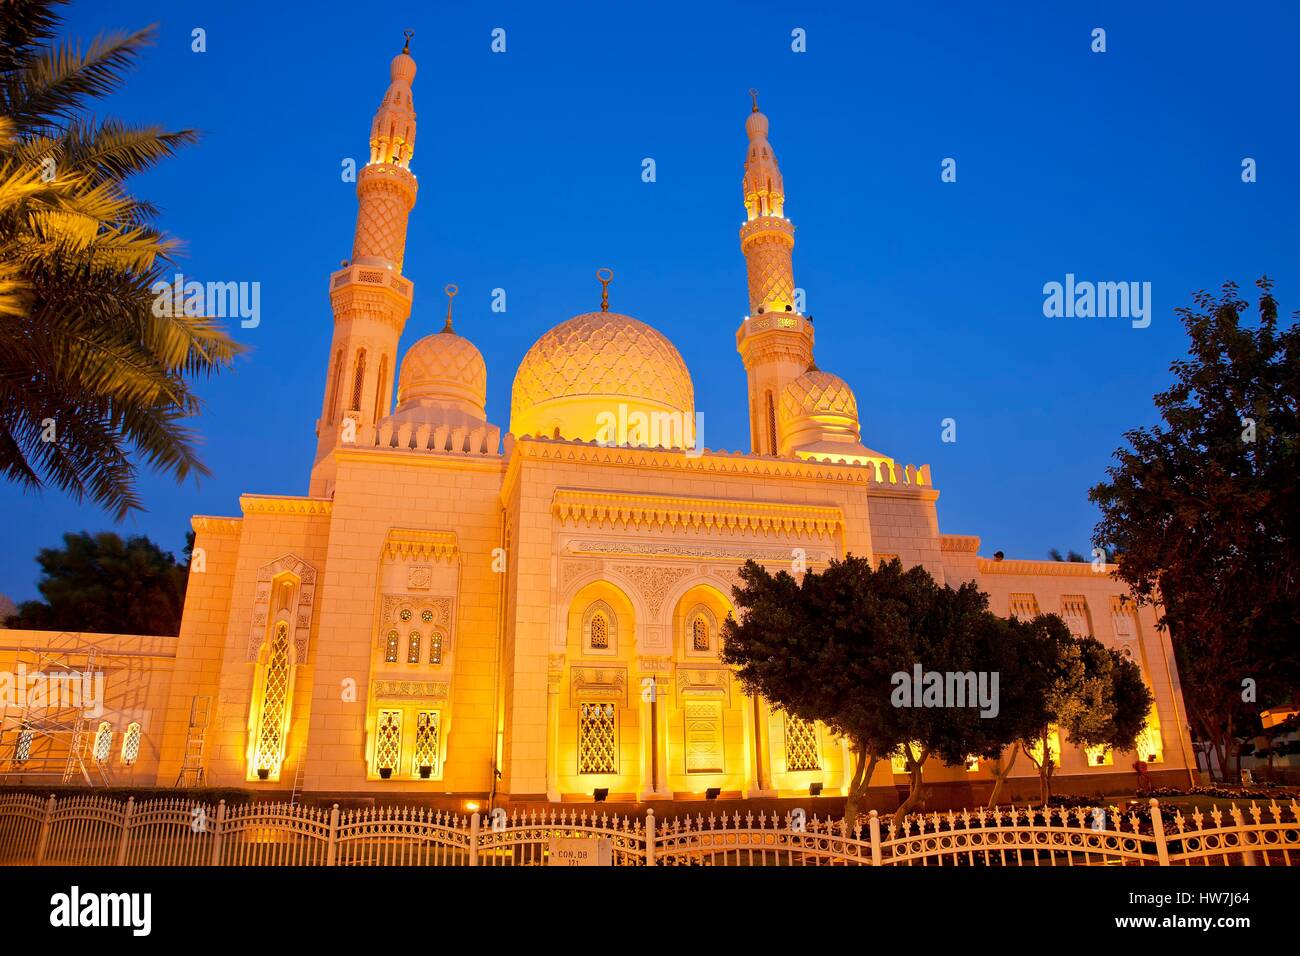 Los Emiratos Árabes Unidos, Dubai, Mezquita Jumeirah al atardecer Foto de stock